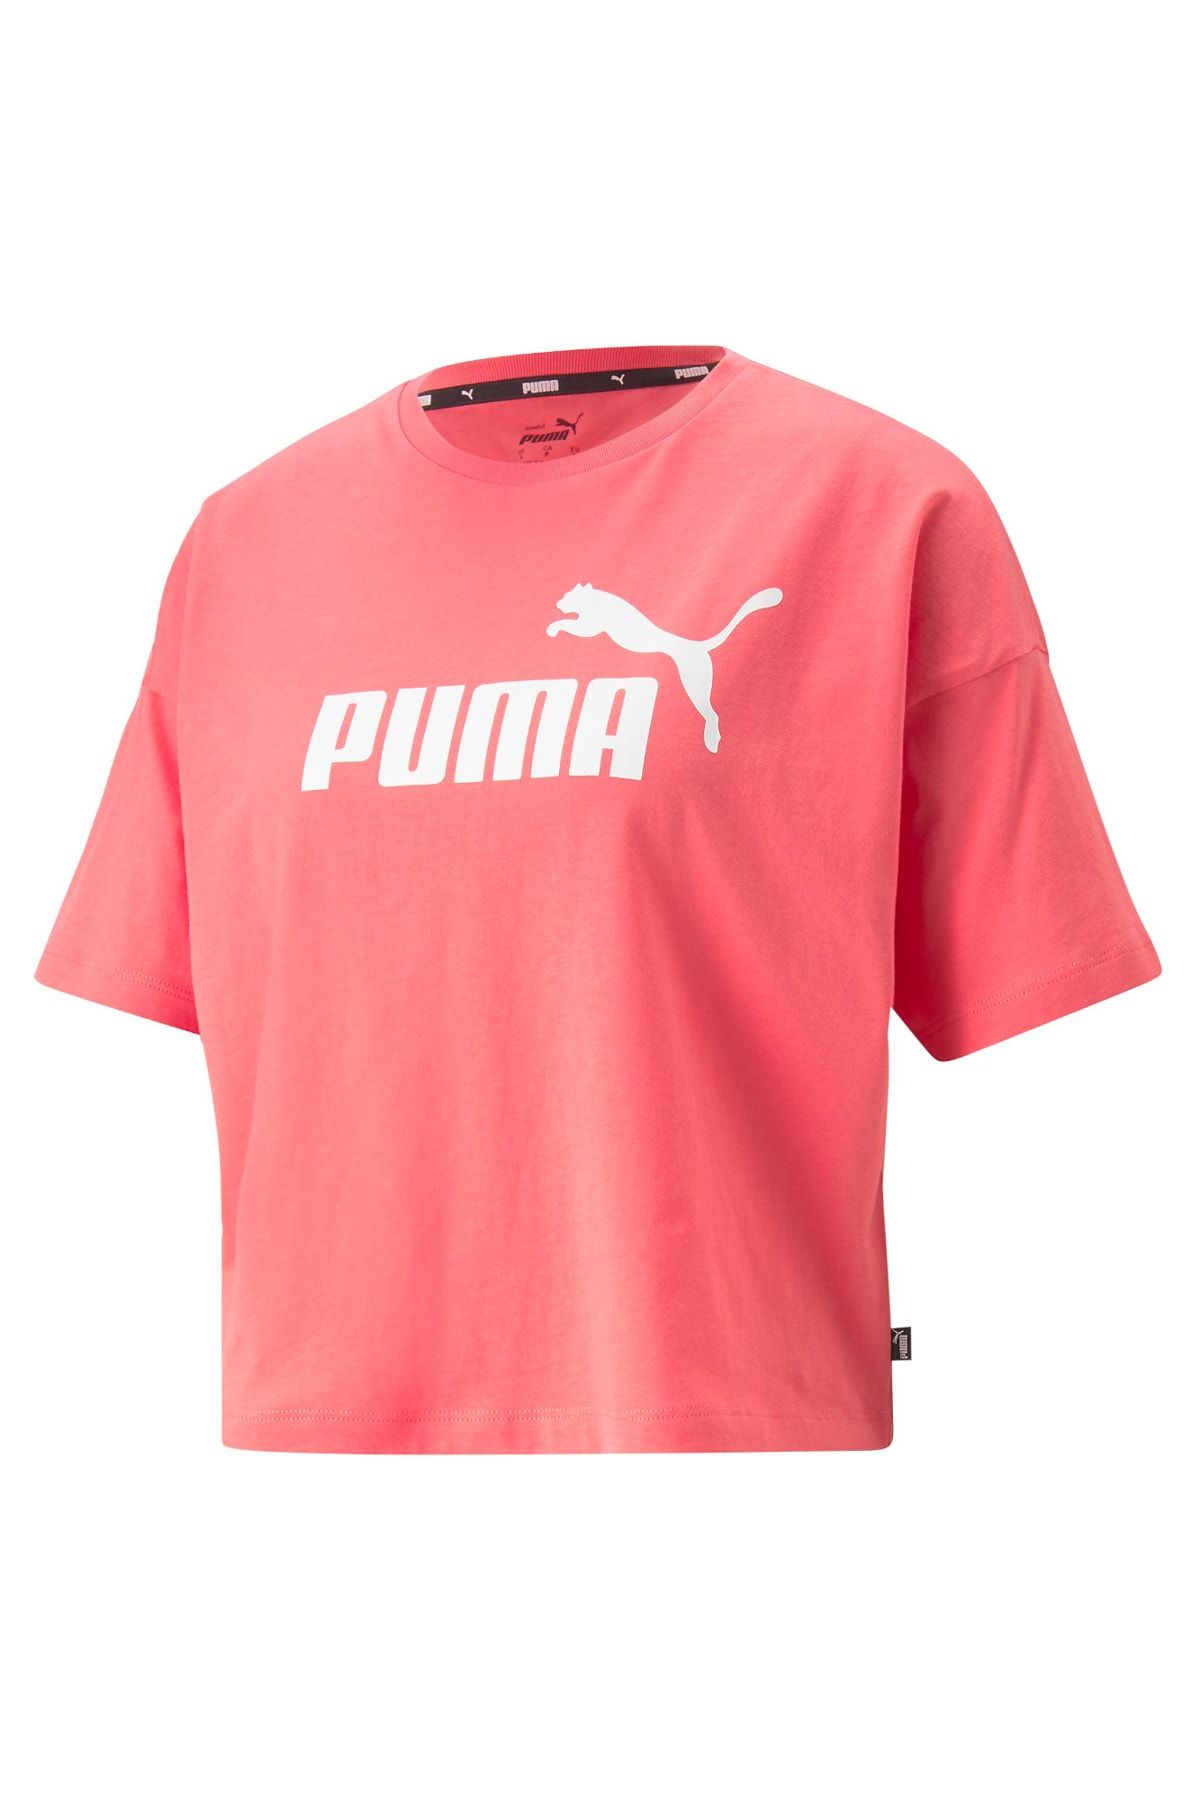 T-Shirt Women/Girls Puma Trendyol -